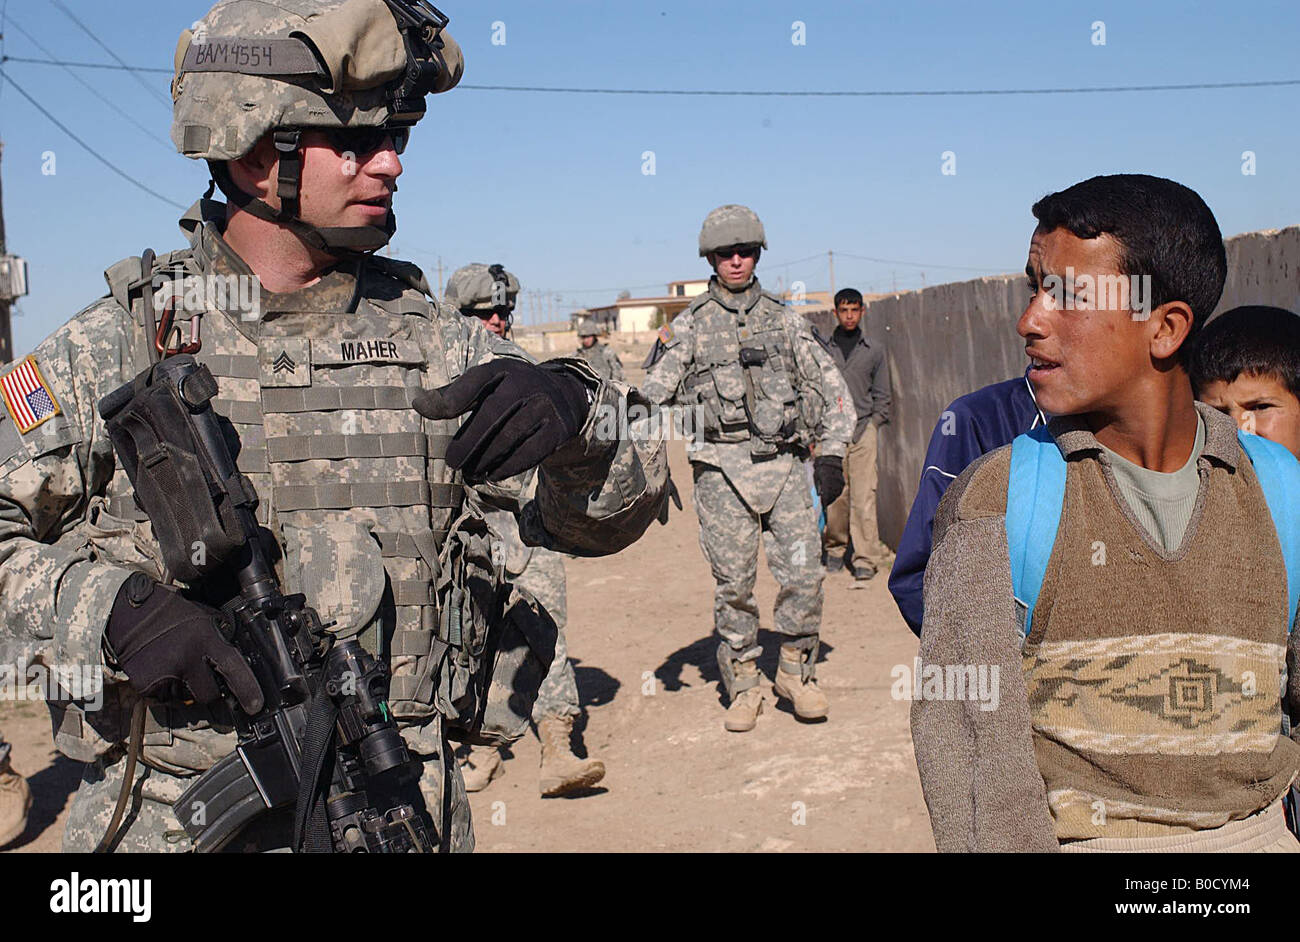 U S Army Sgt Frankie Maher left talks with Iraqi children in Musayd Iraq on April 25 2007 Stock Photo